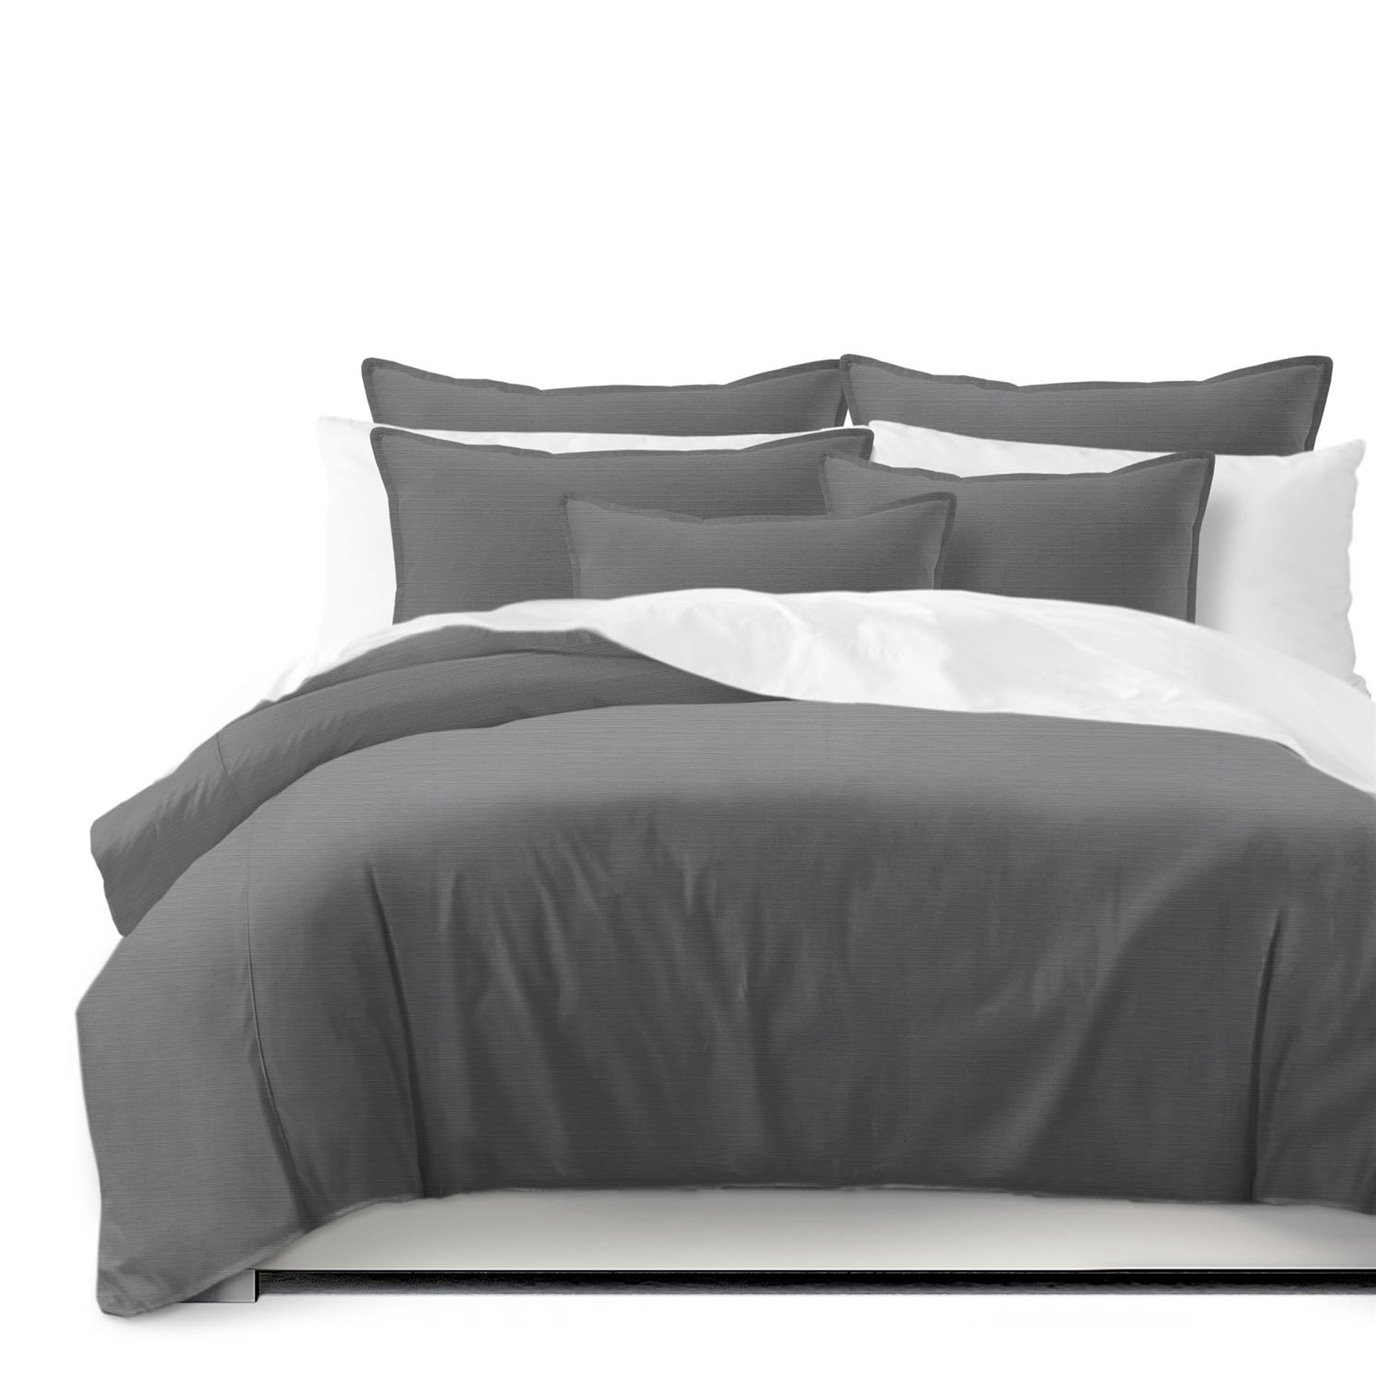 Nova Charcoal Comforter and Pillow Sham(s) Set - Size Twin